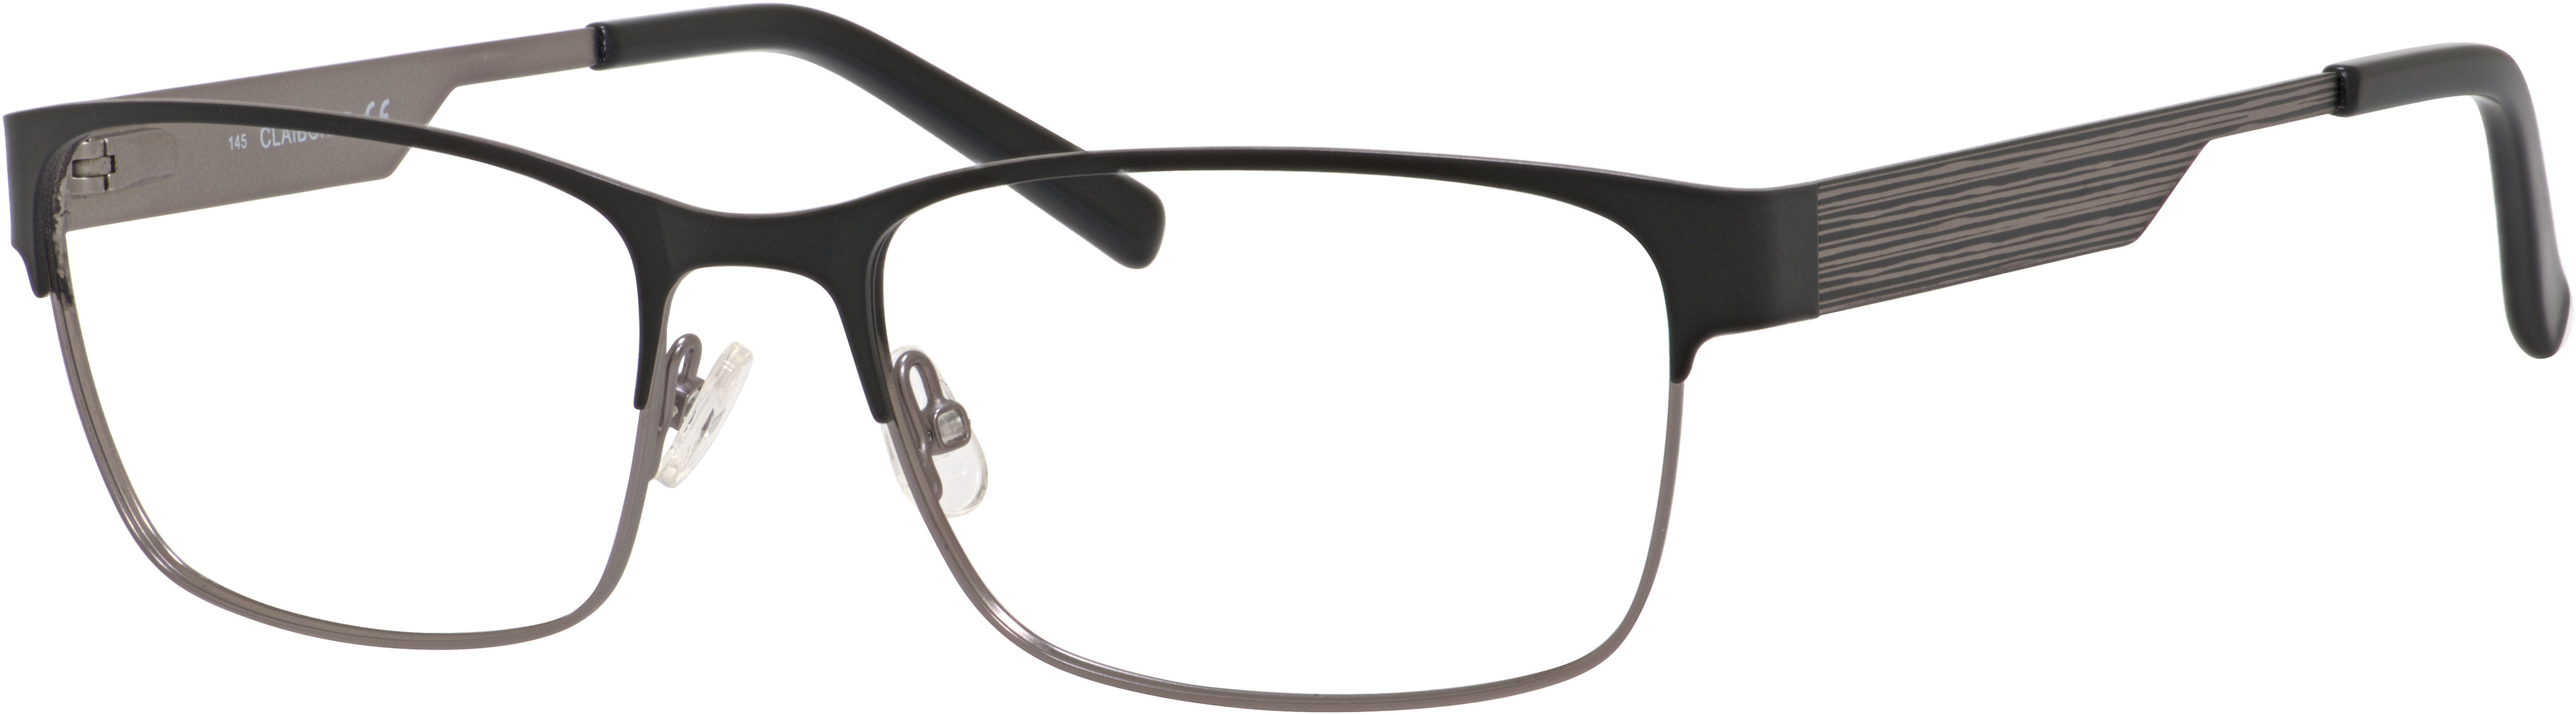  Claiborne 224 Rectangular Eyeglasses 0003-0003  Matte Black (00 Demo Lens)